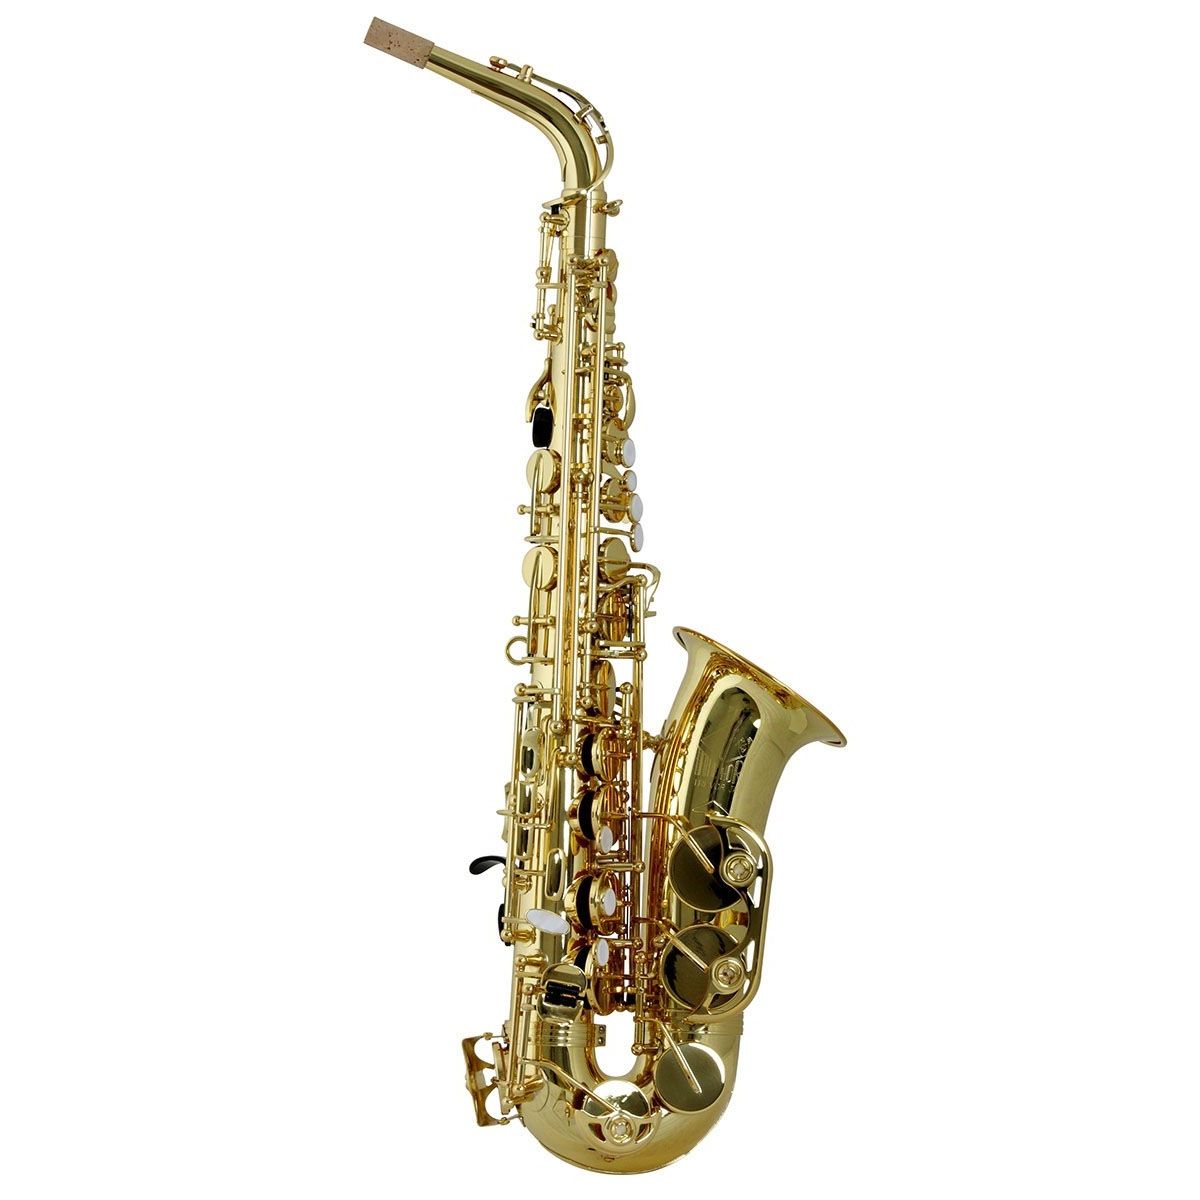 Trevor James Alto Saxophone - Classic 'The Horn'